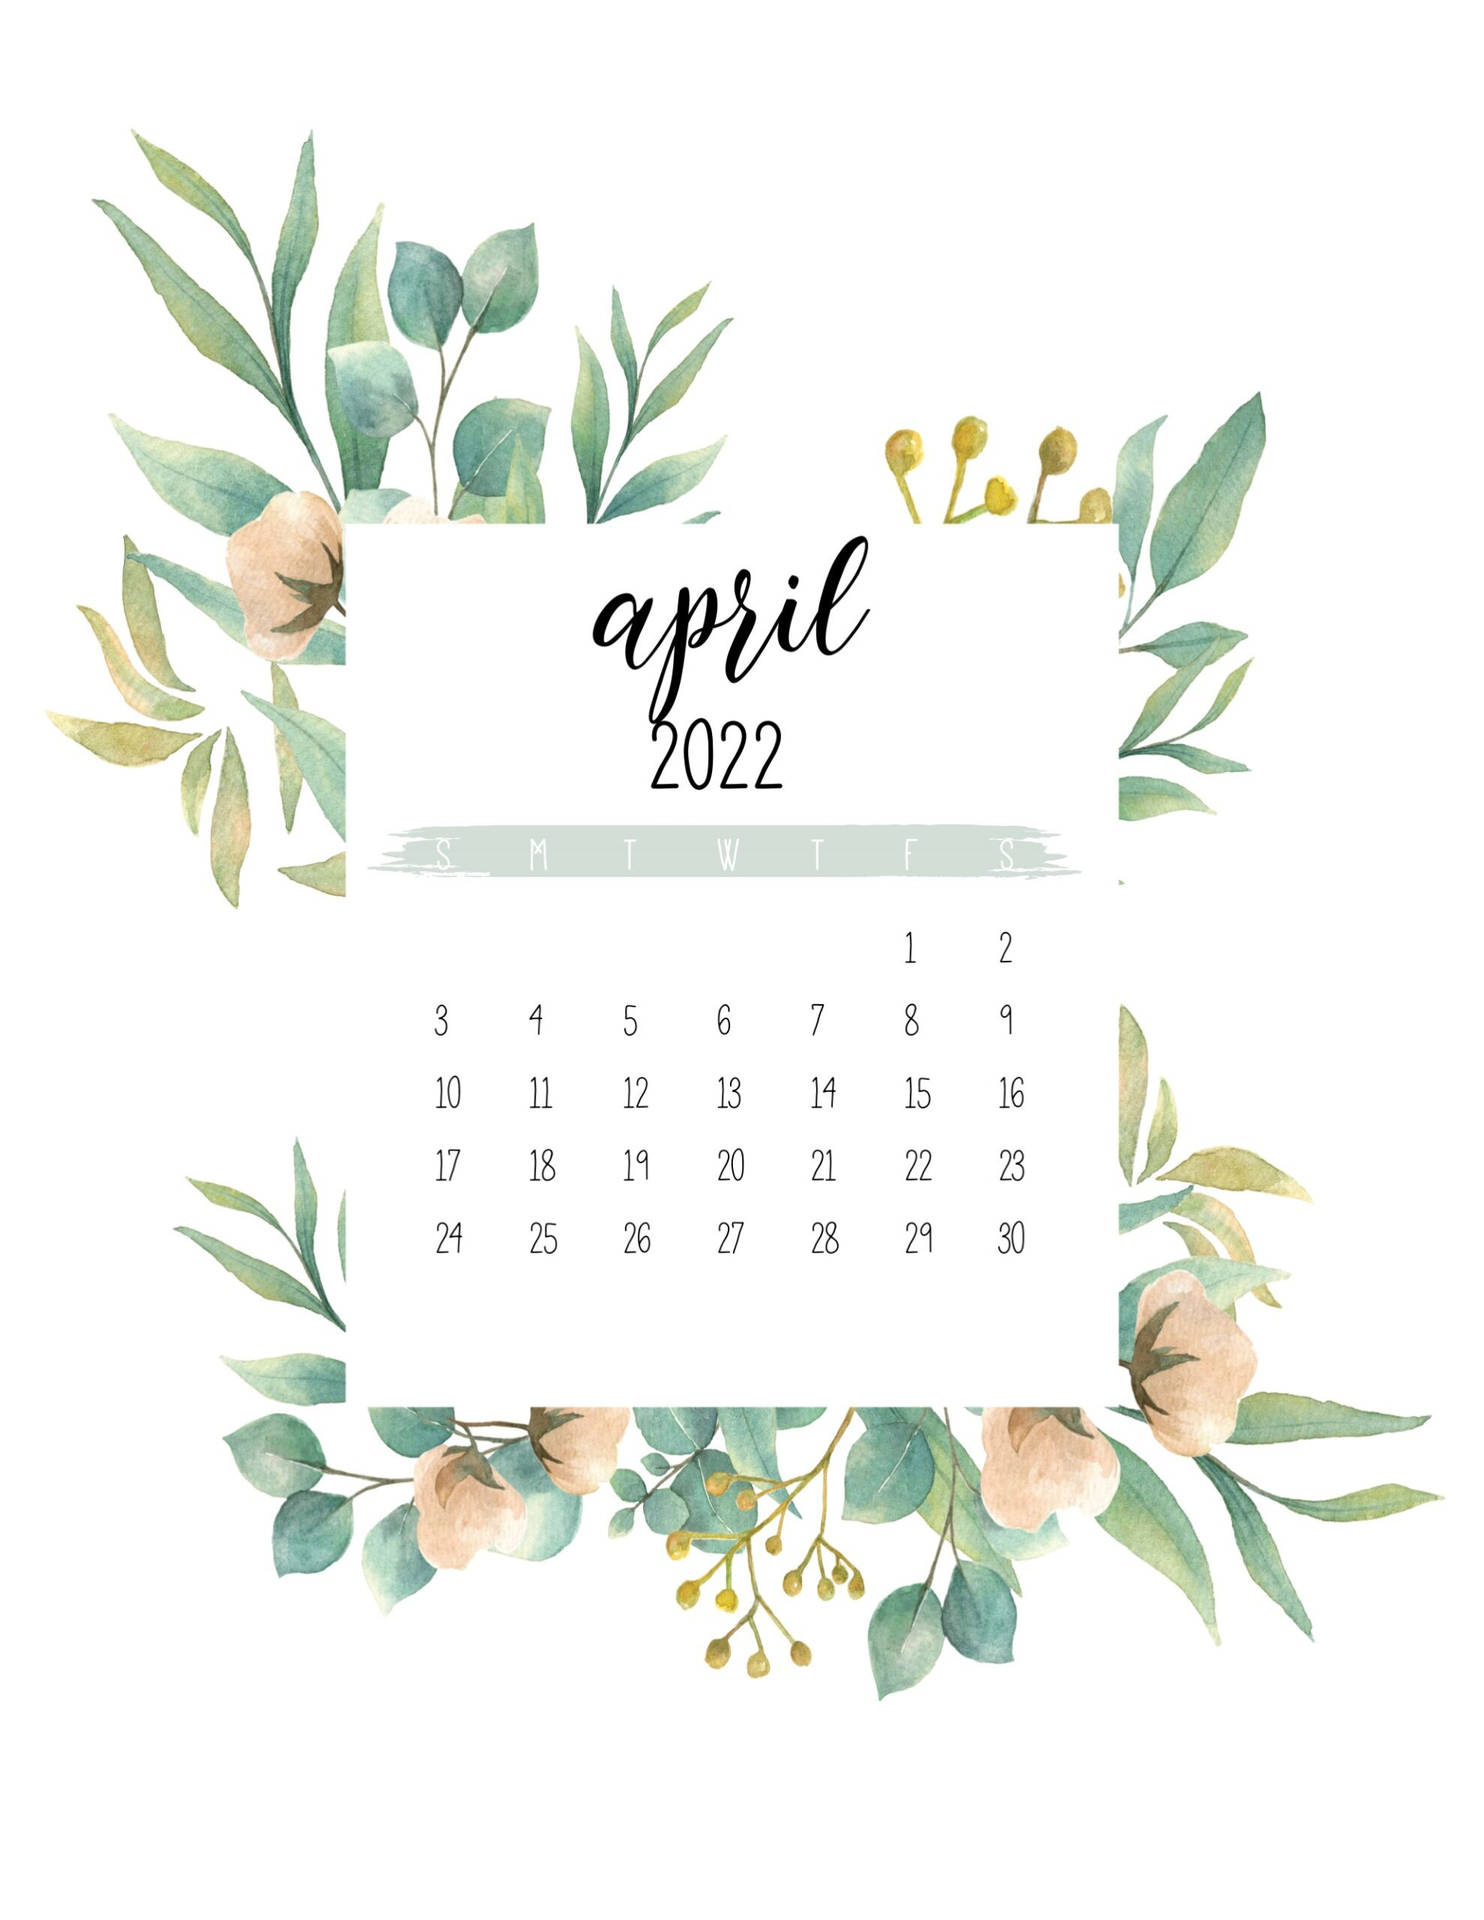 100+] April 2022 Calendar Background s 